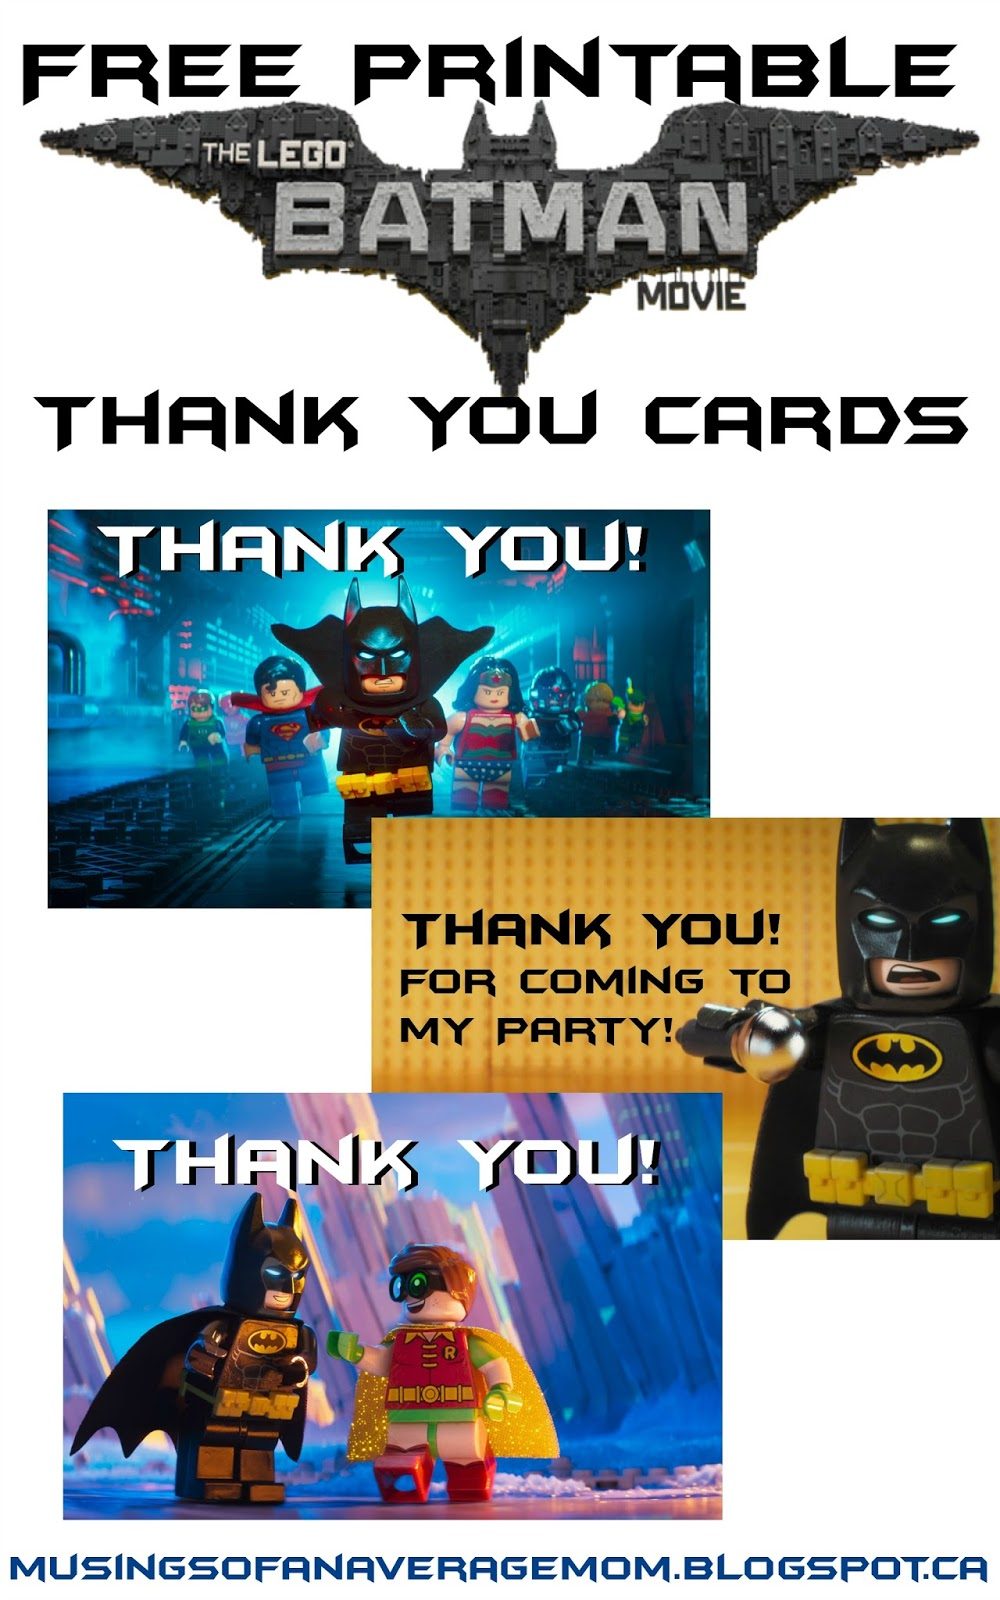 Musings Of An Average Mom: Lego Batman Thank You Cards - Free Printable Lego Batman